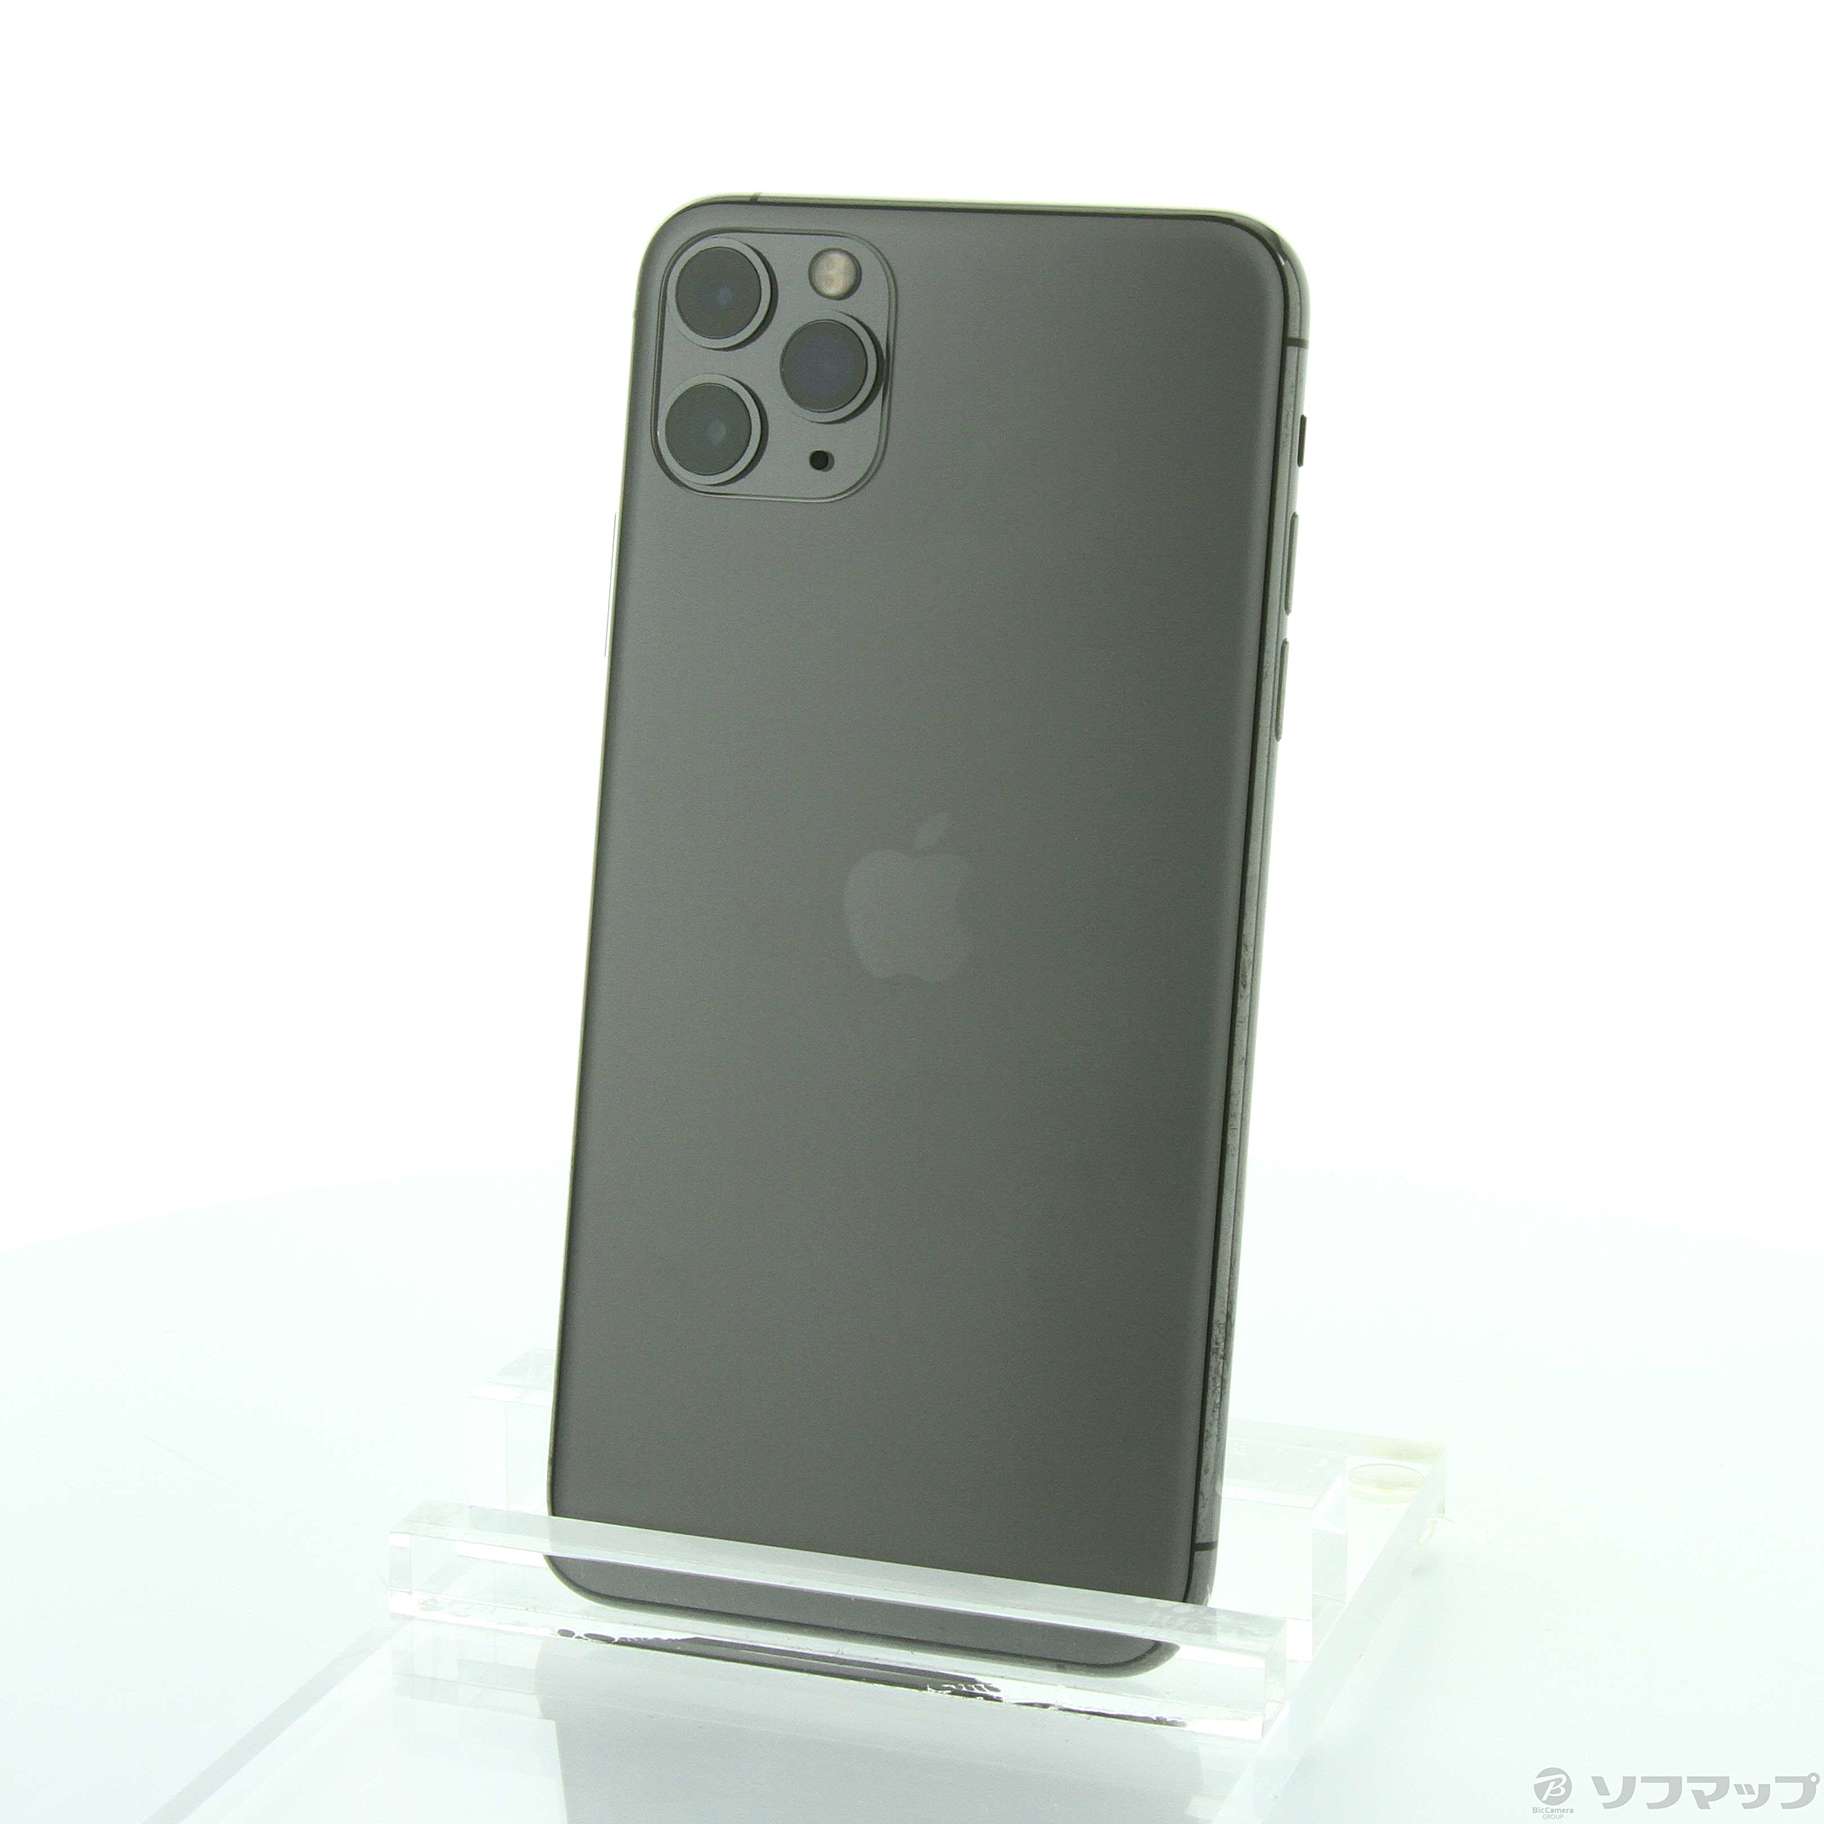 iPhone 11 Pro Max スペースグレイ 256 GB Softba… - luknova.com